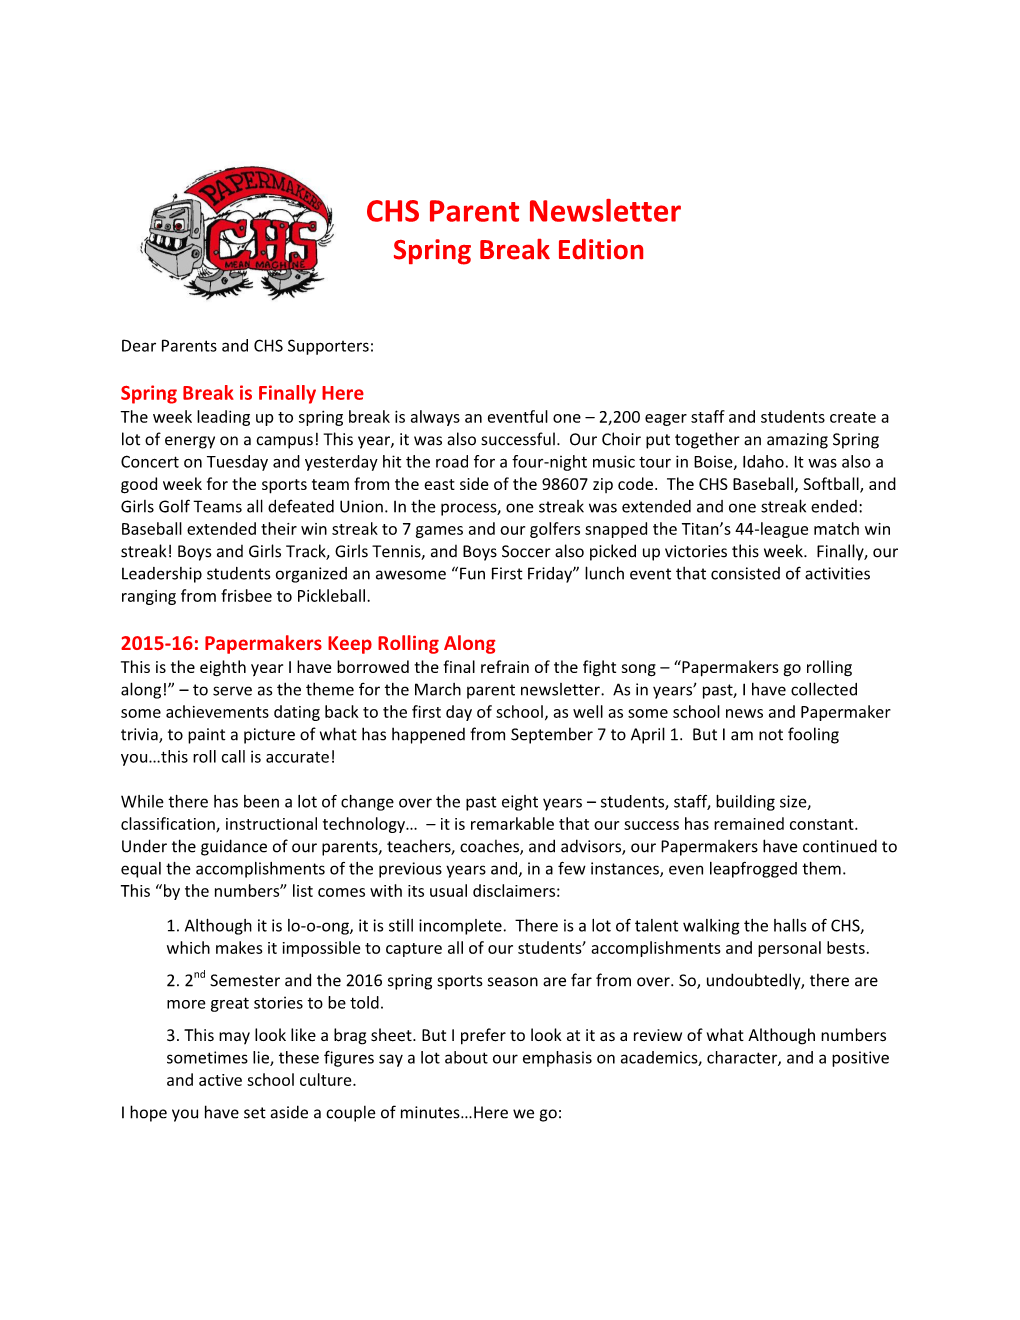 CHS Parent Newsletter Spring Break Edition